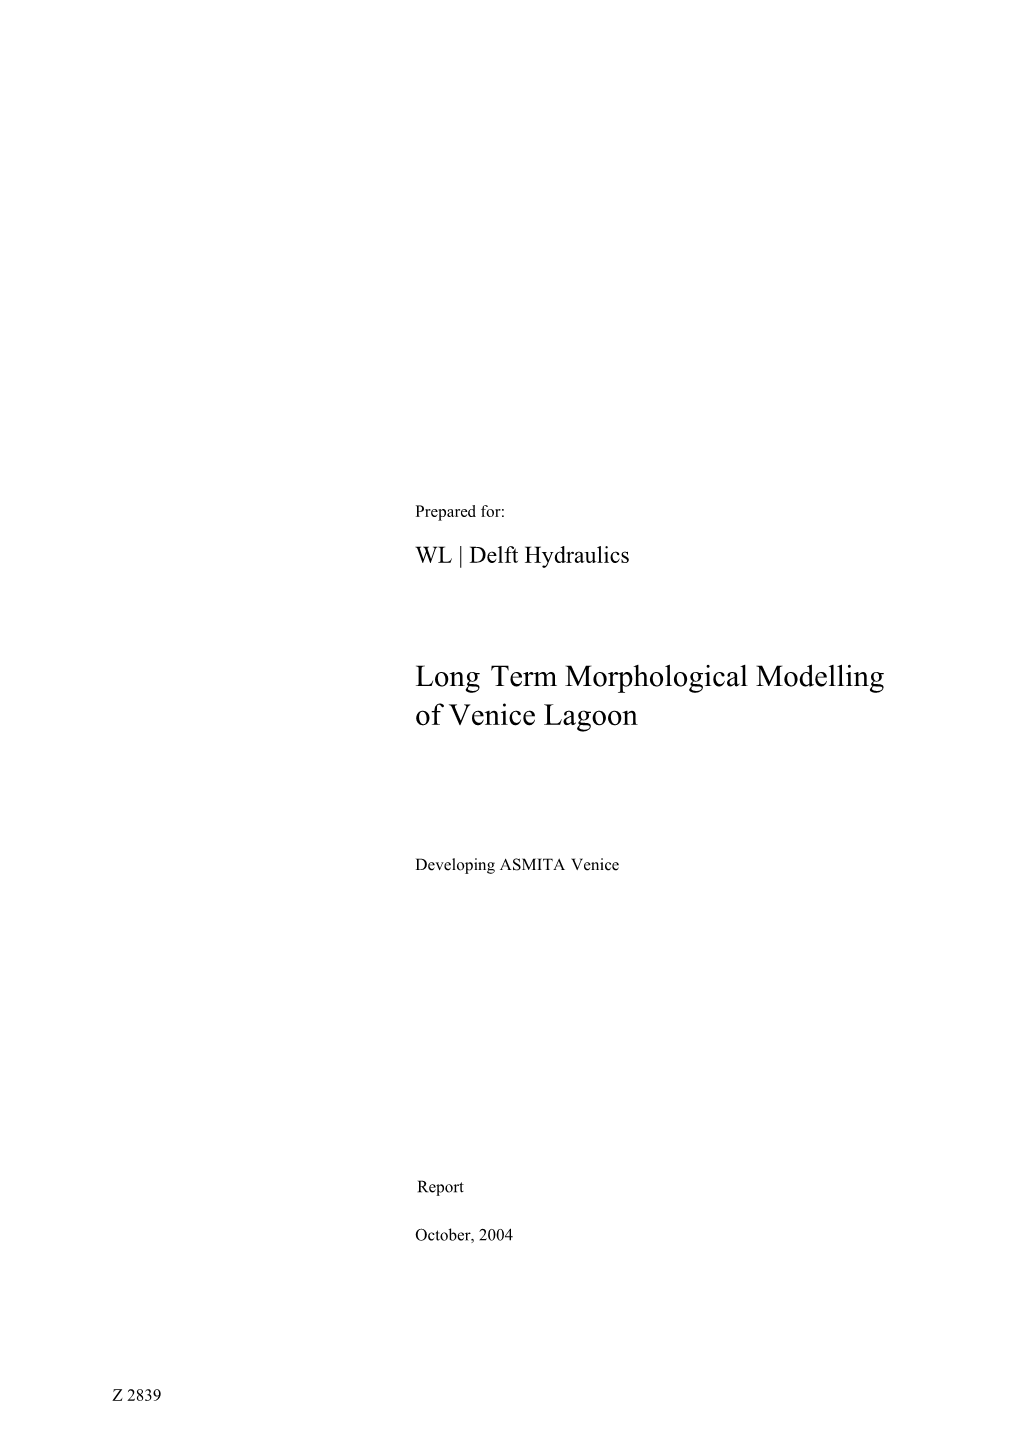 Long-Term Morphological Modelling of Venice Lagoon